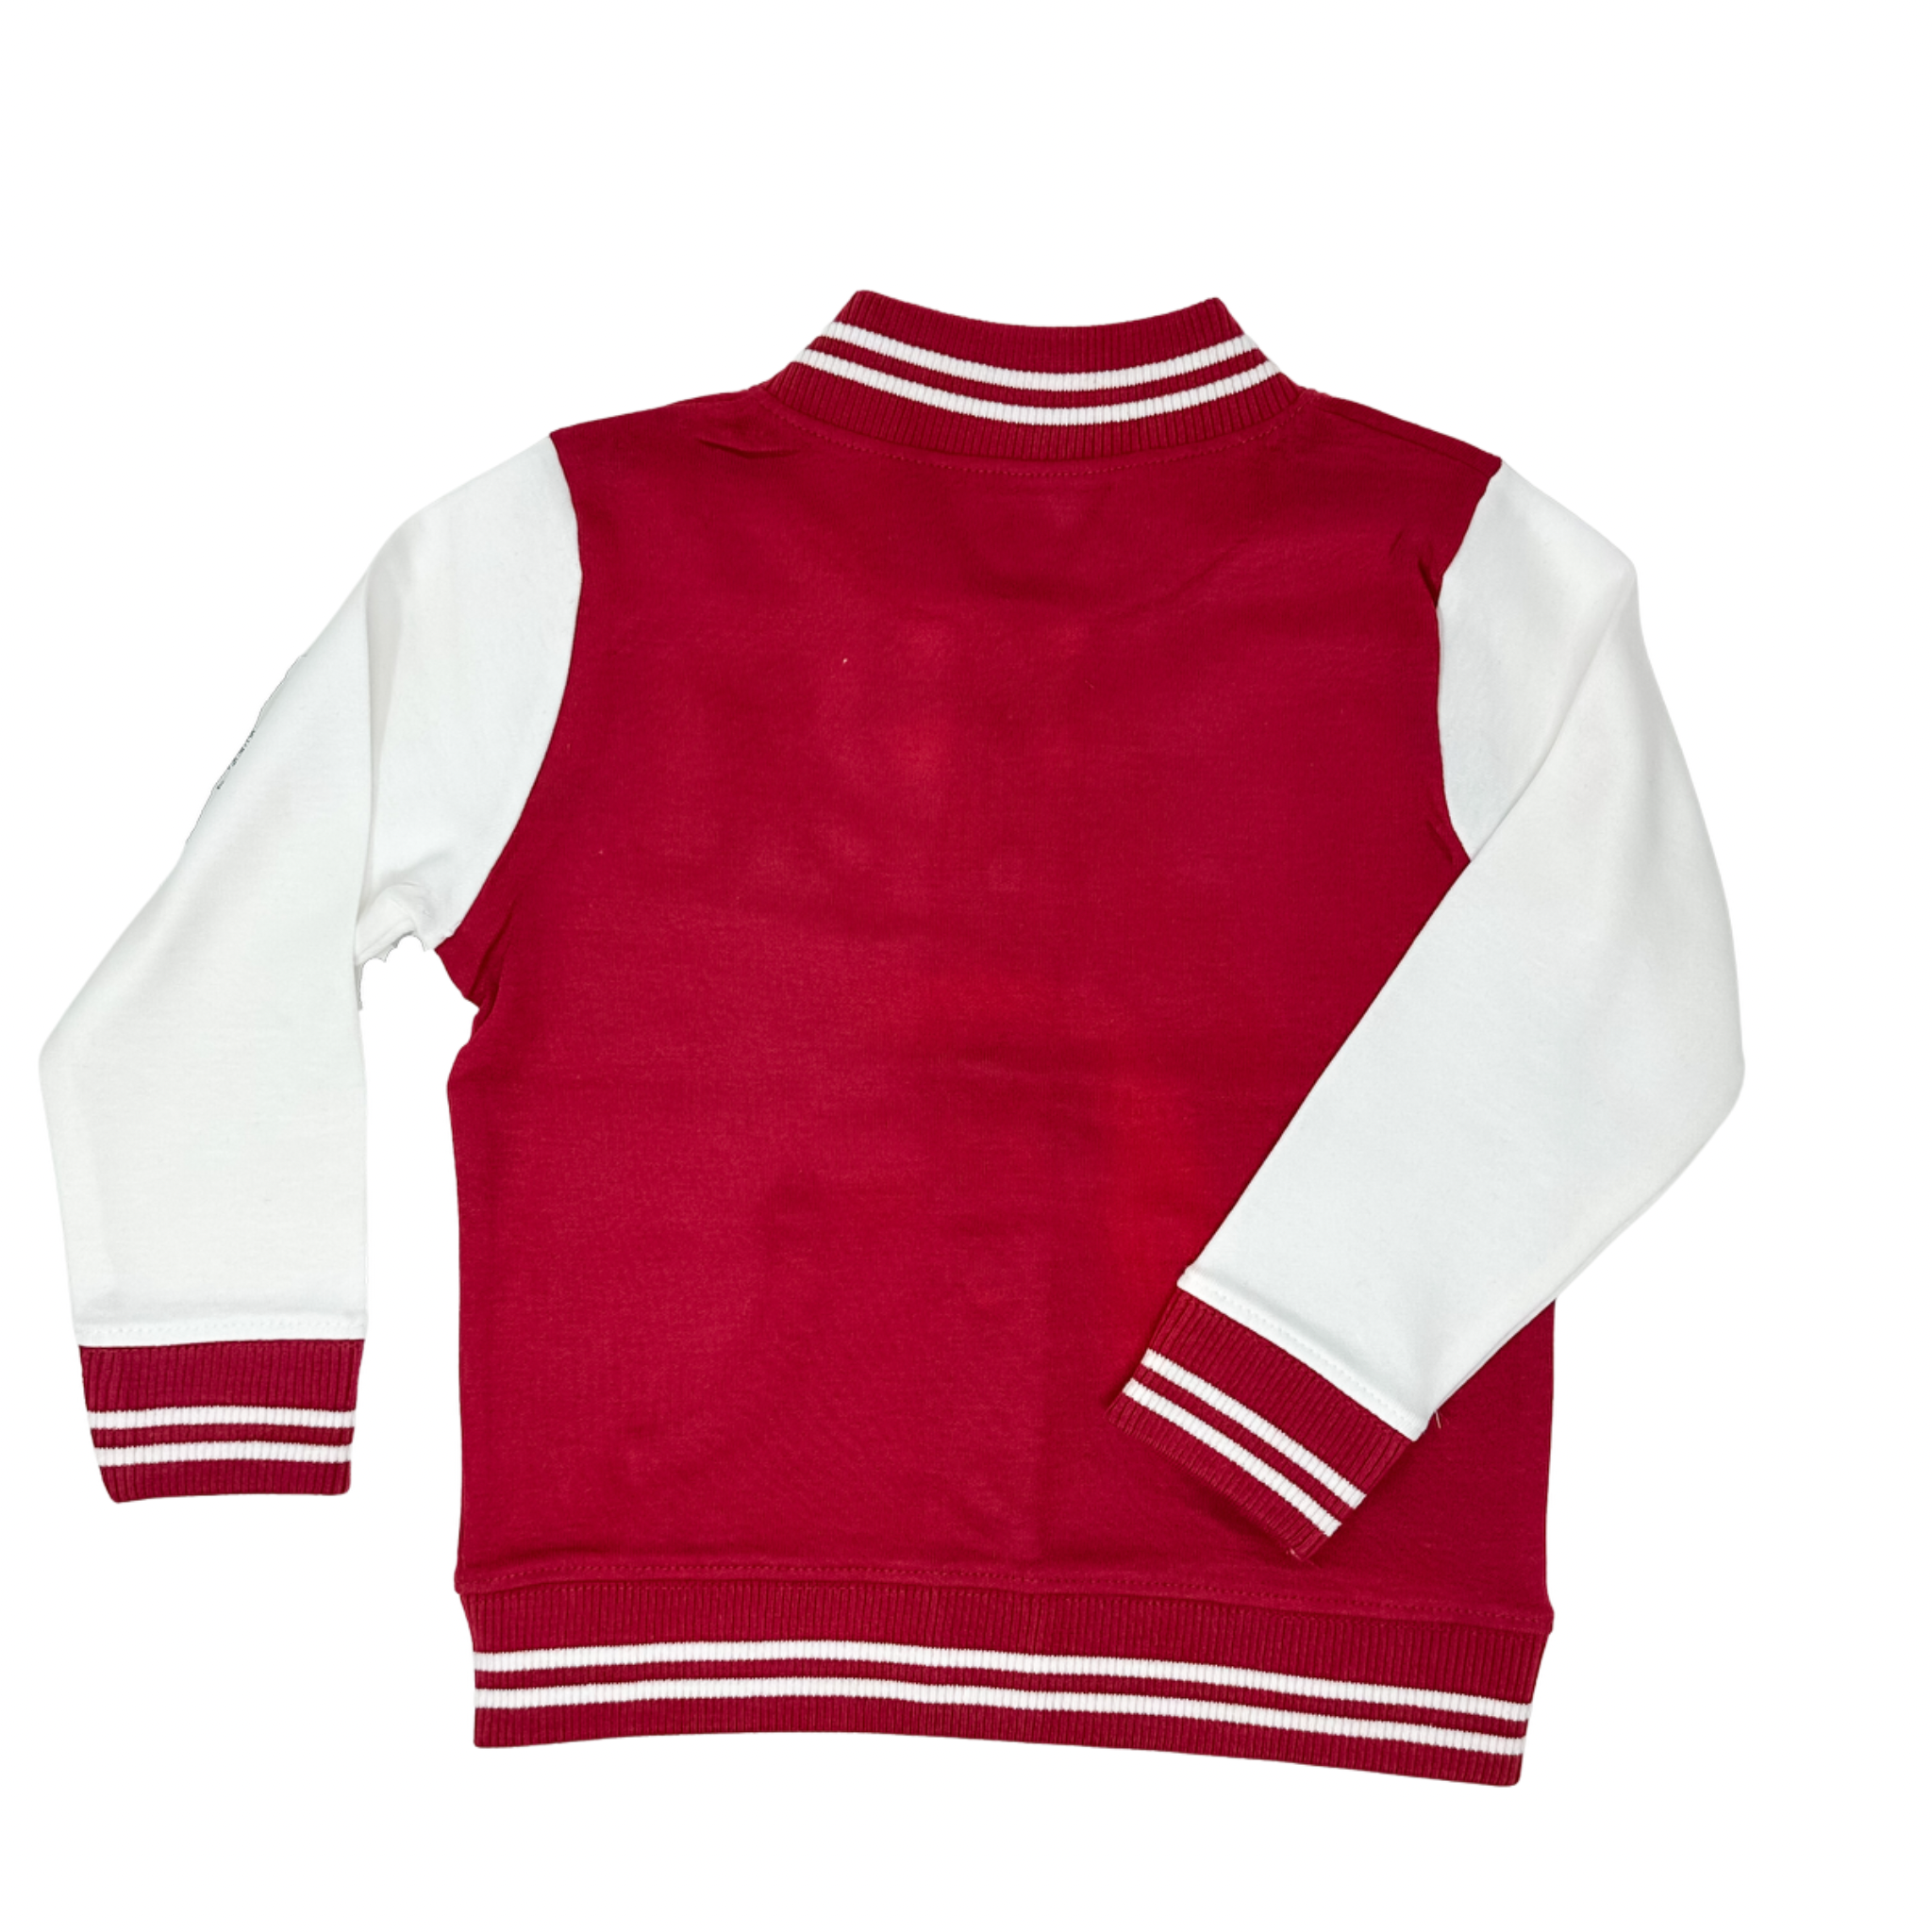 Creative Knitwear - Varsity Jacket - Bama Crimson